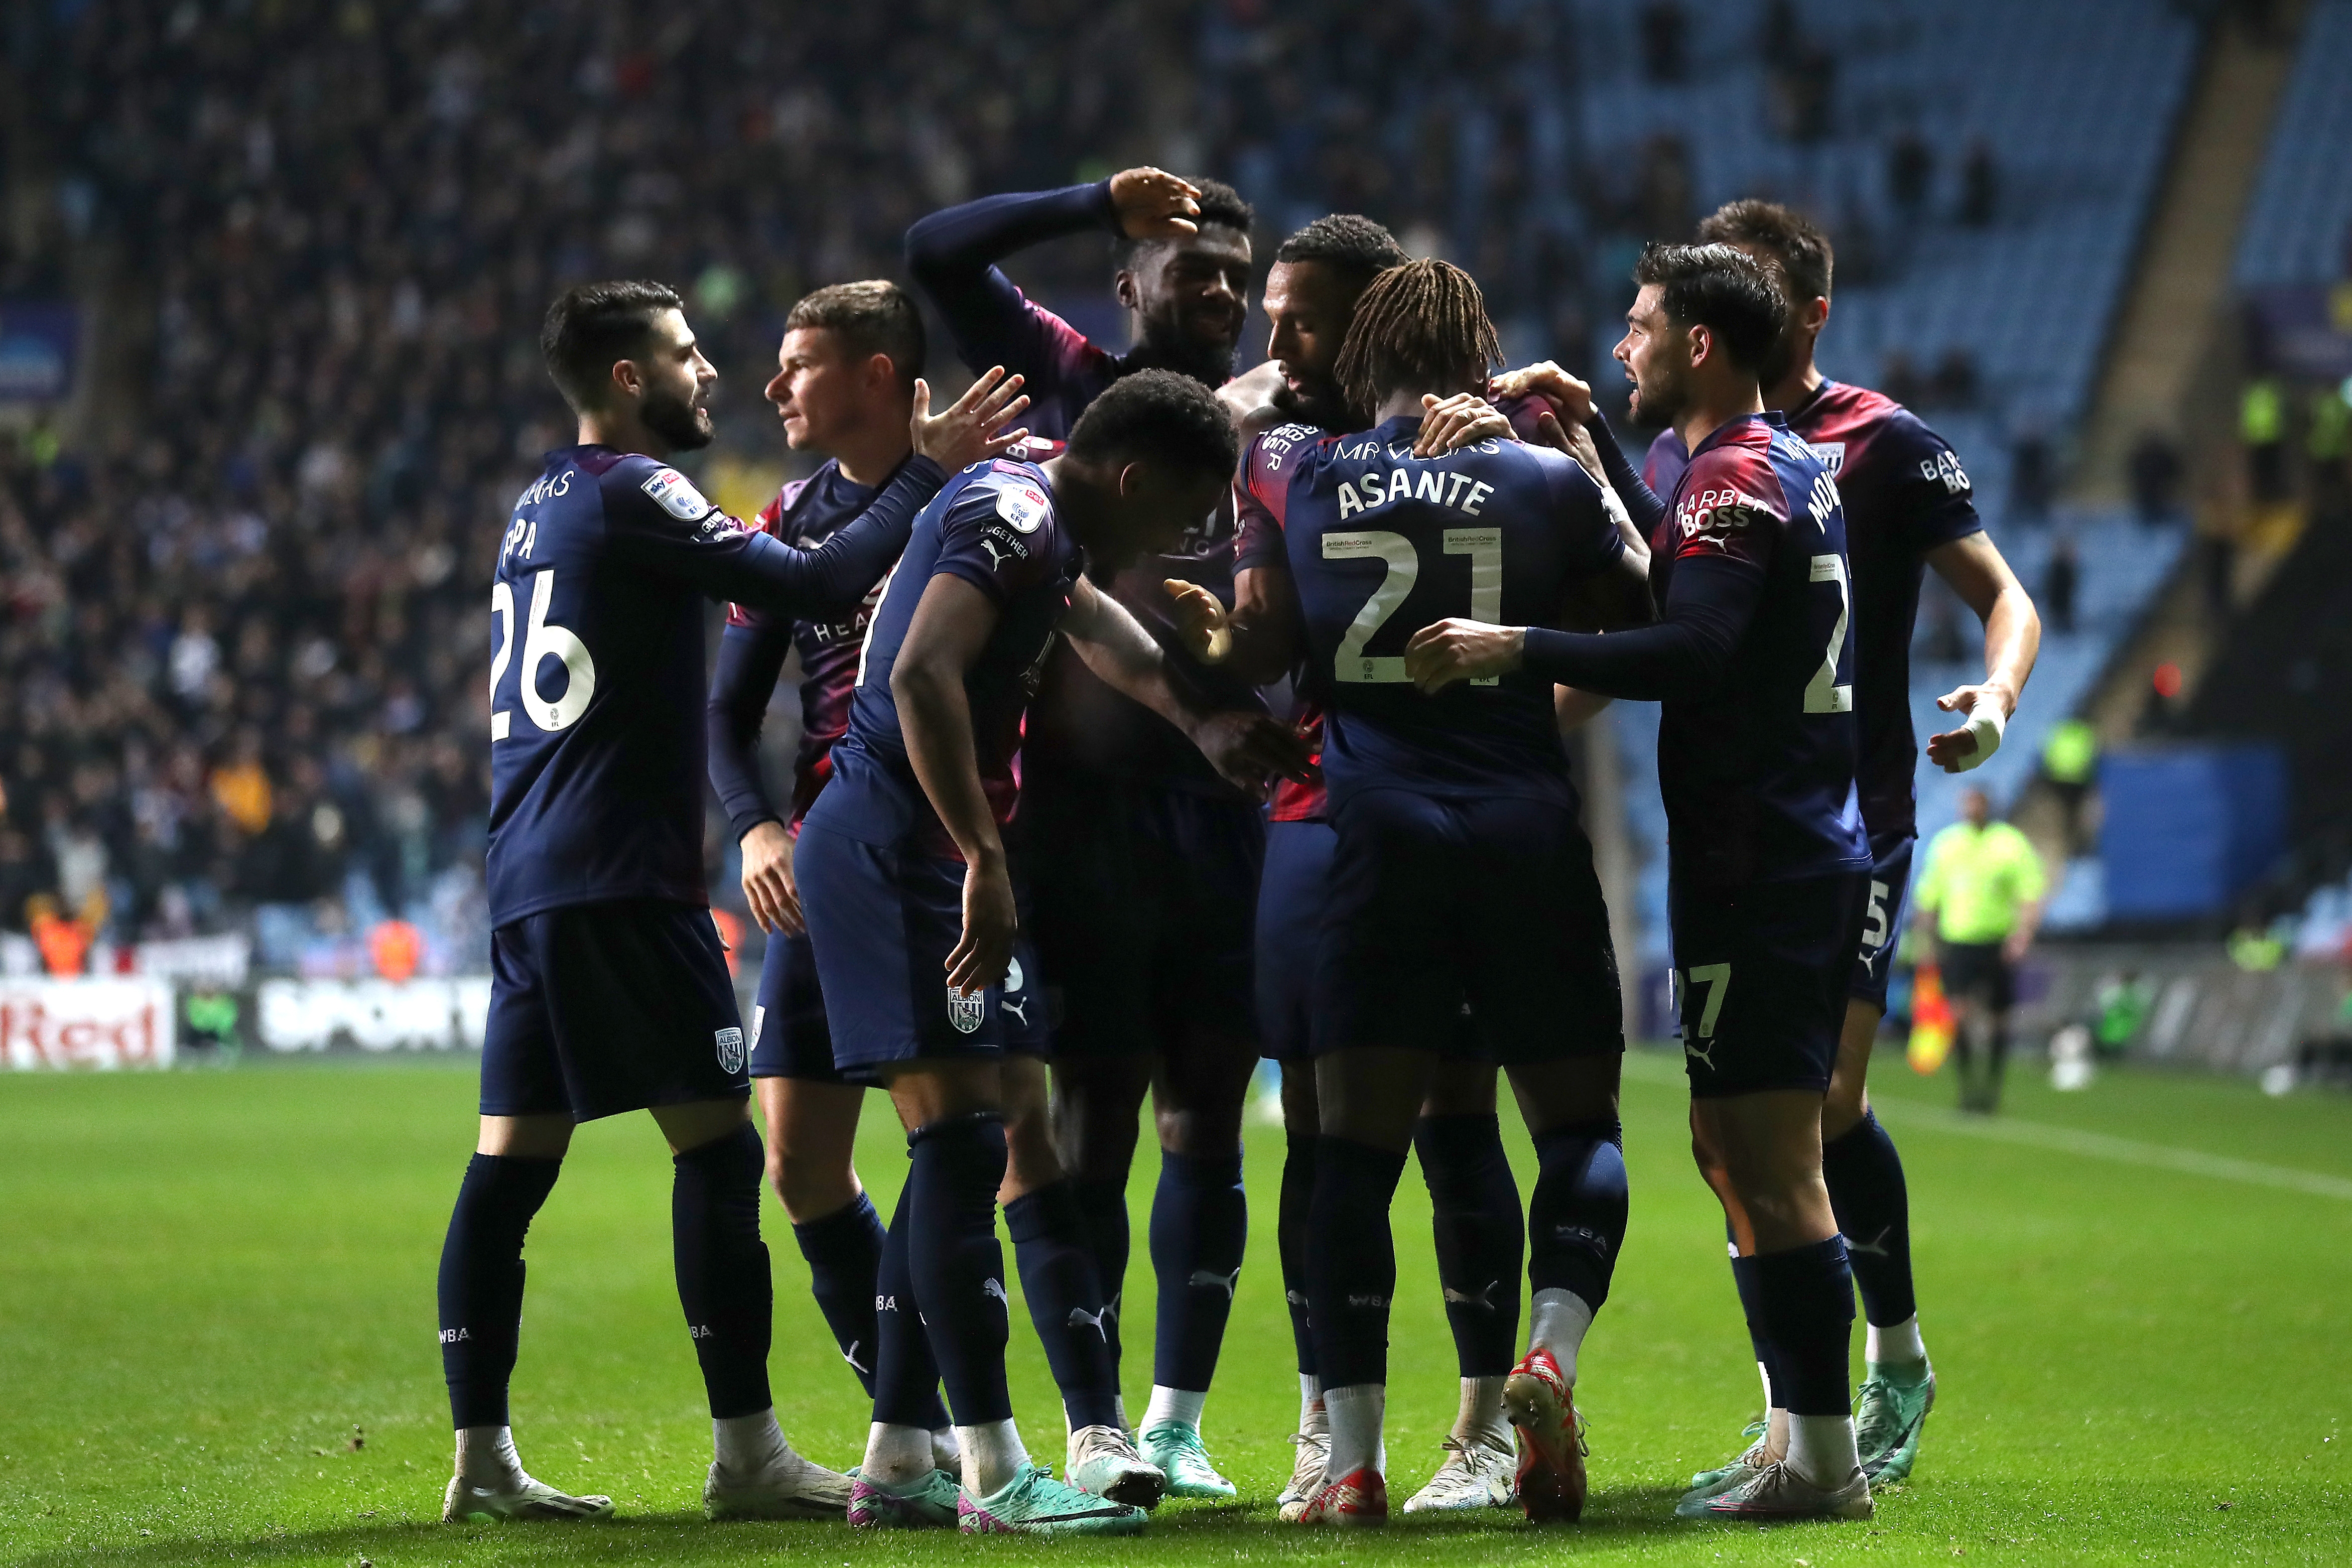 Brandon Thomas-Asante celebrates scoring against Coventry City with his team-mates